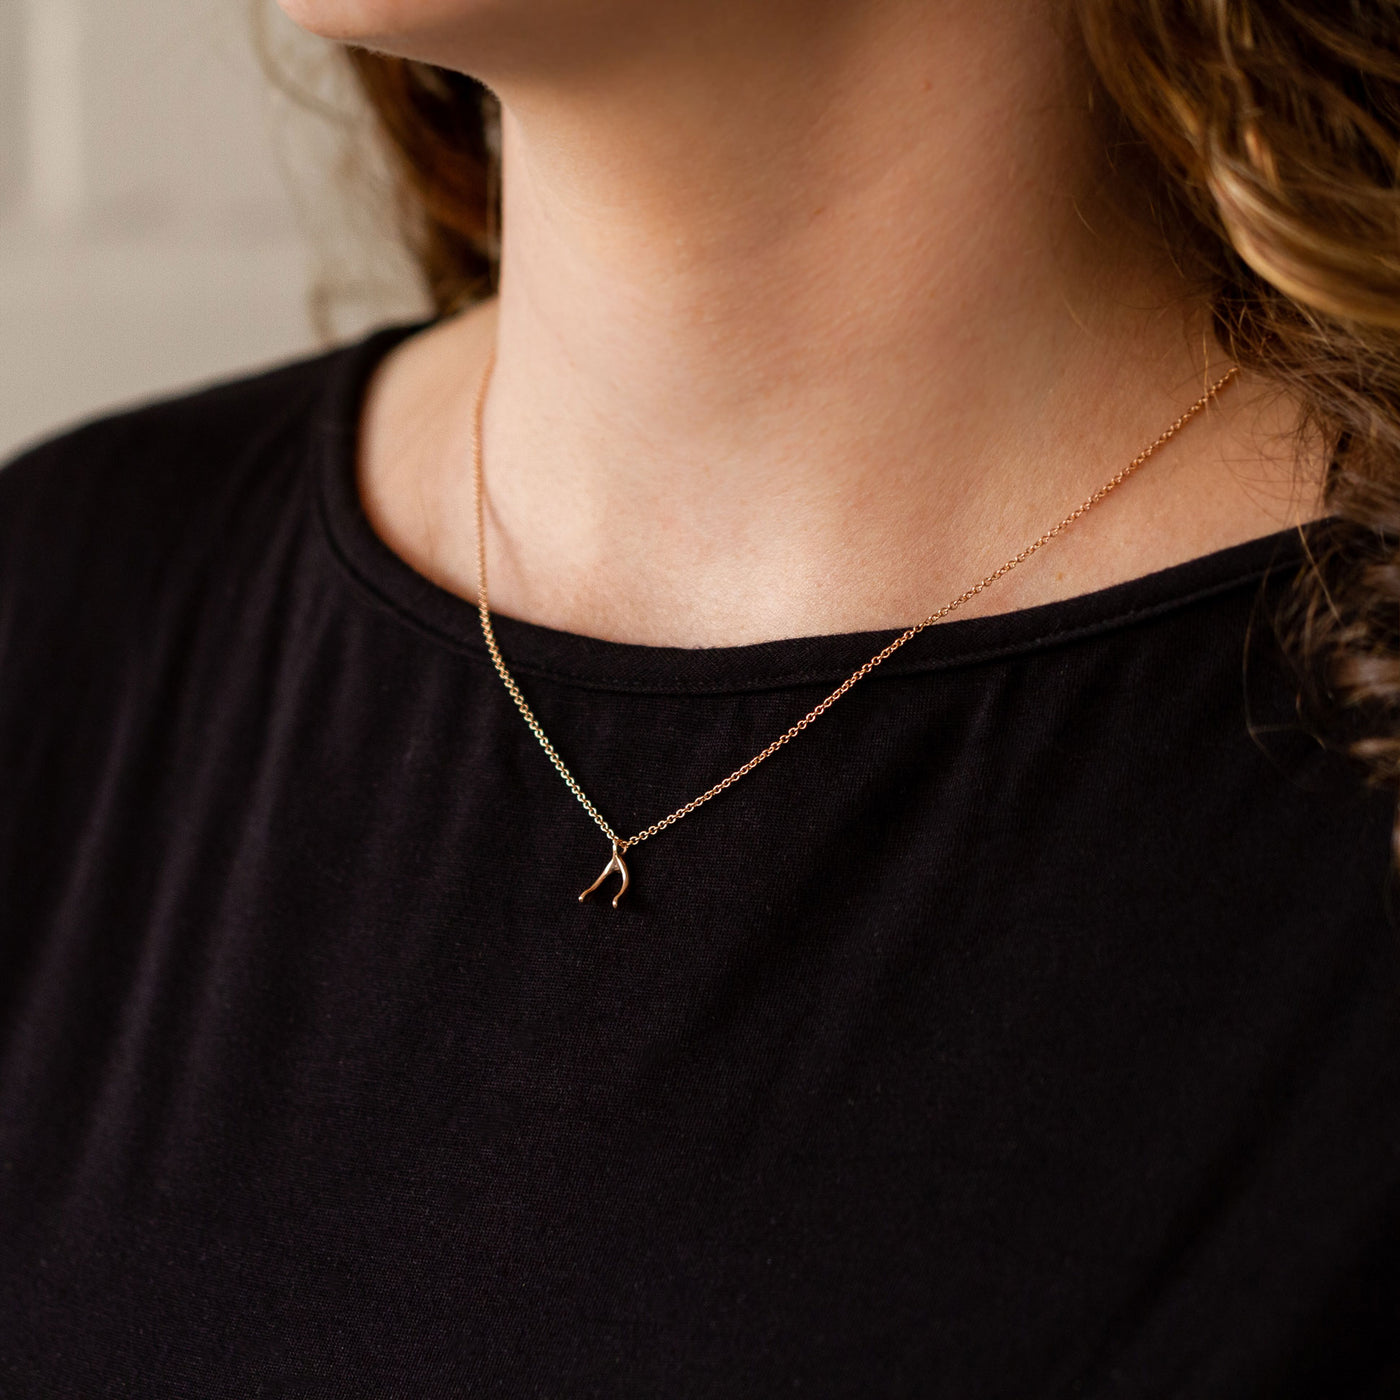 Rose Gold Wishbone Necklace around a neck